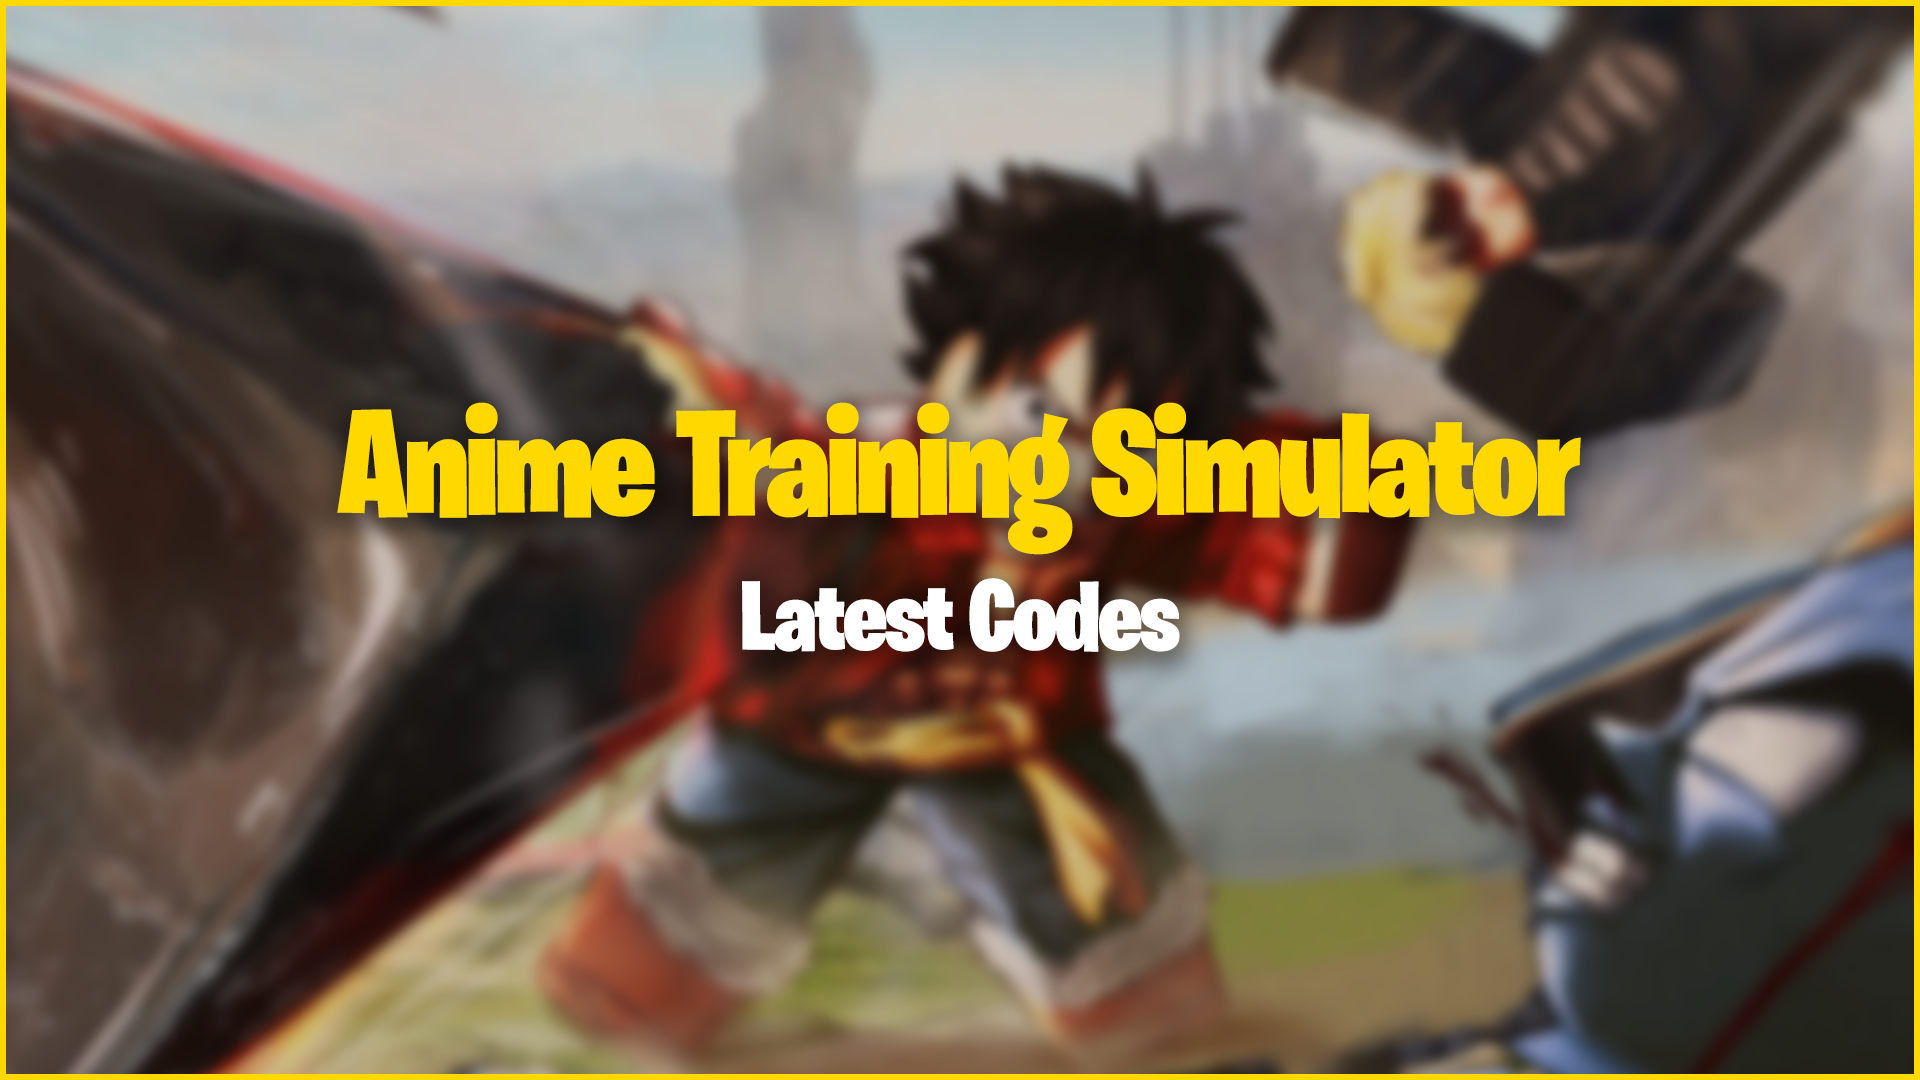 Anime Training Simulator Codes - Free Yen and More